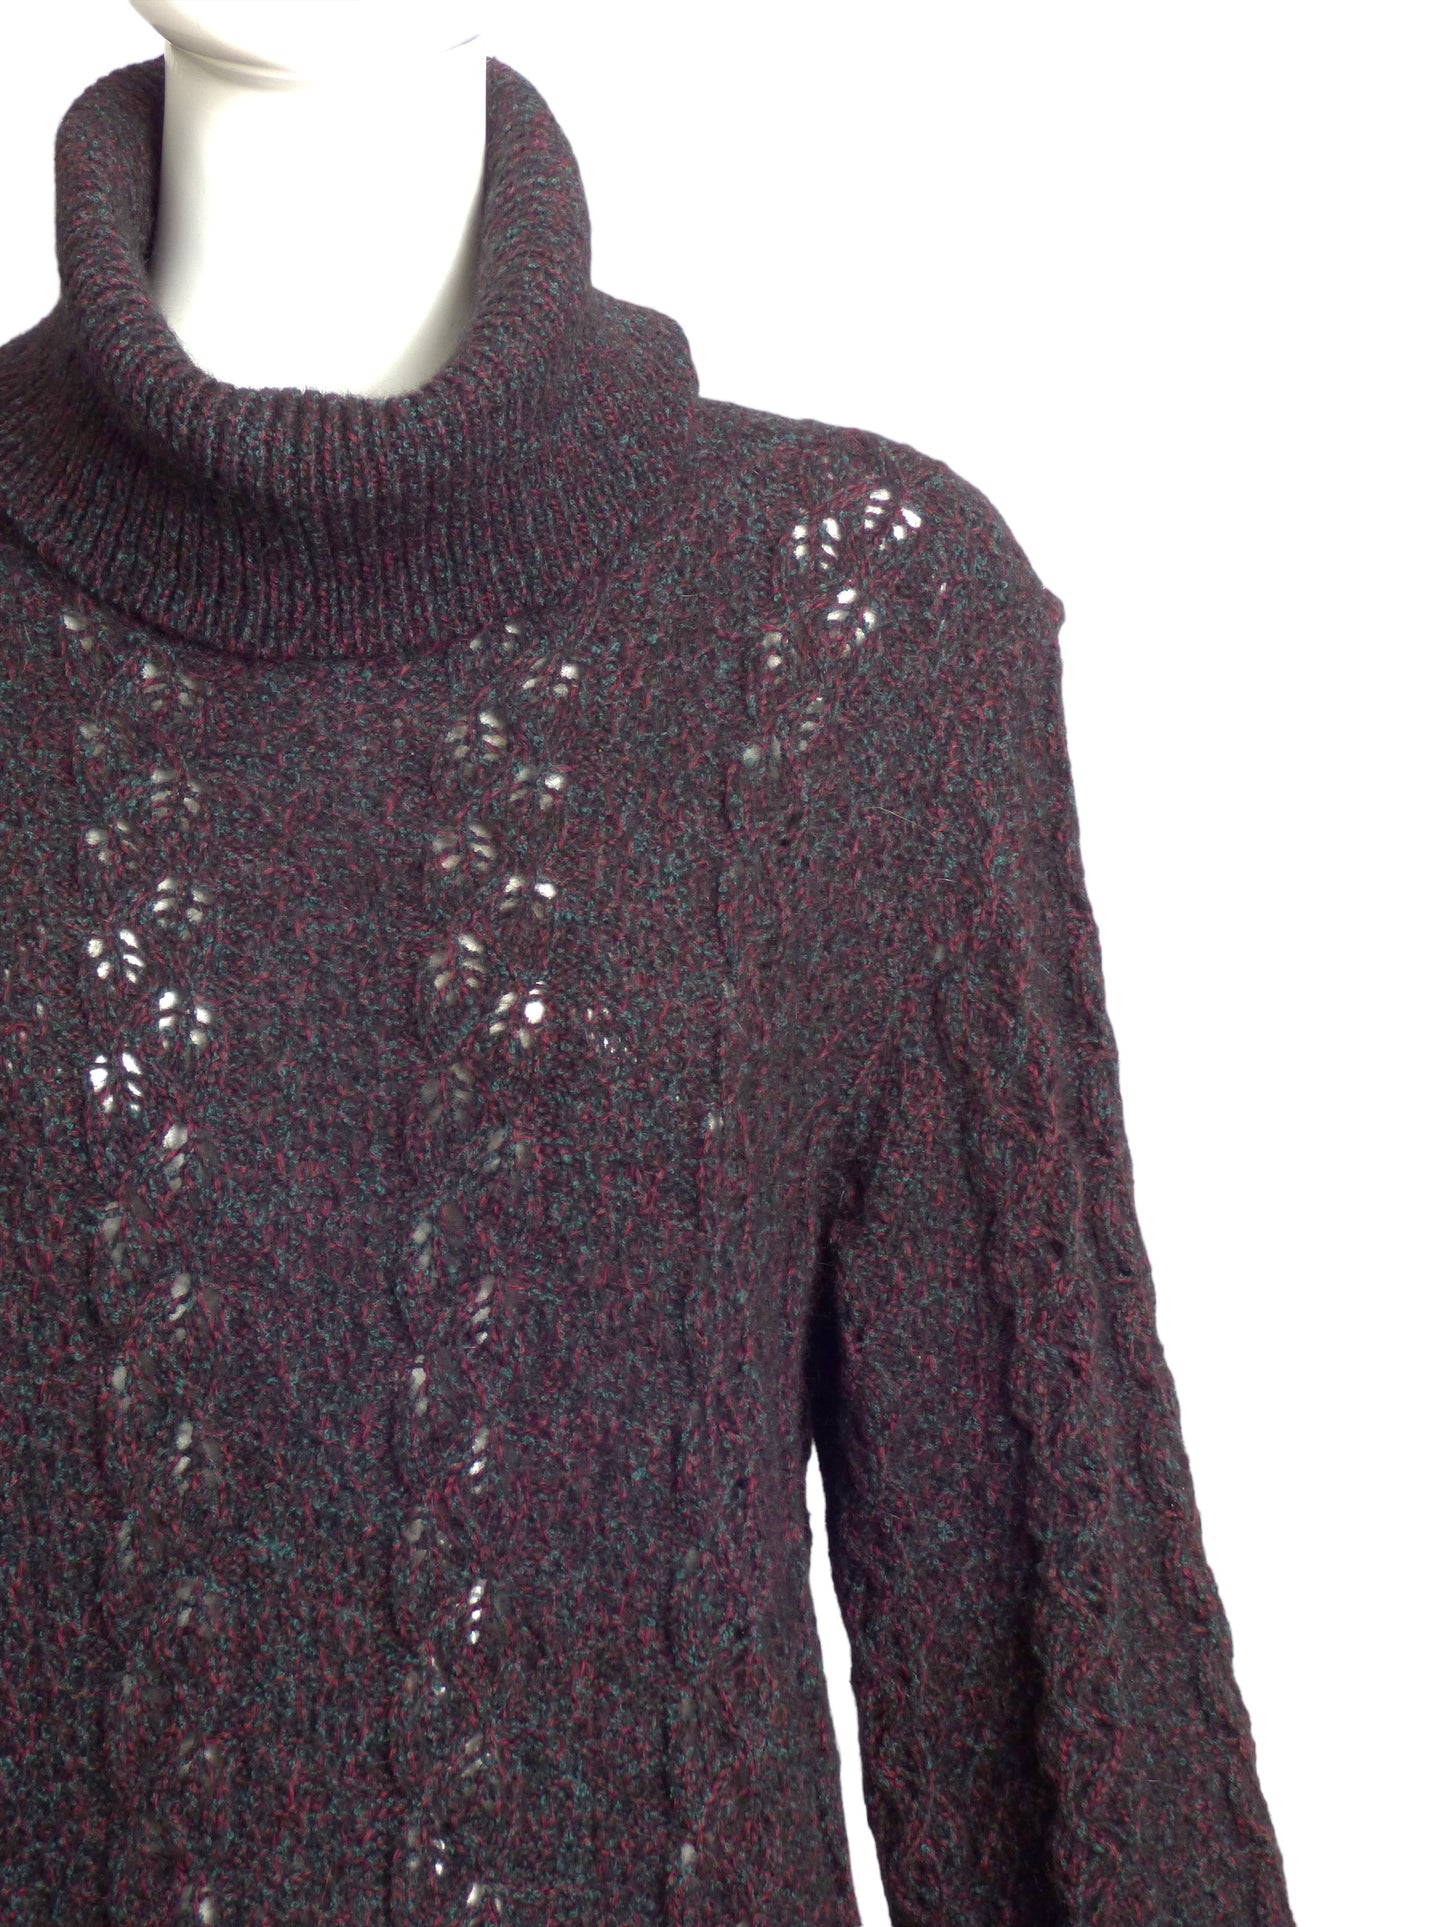 MISSONI- 1970s Wool Knit Turtleneck Dress, Size 8